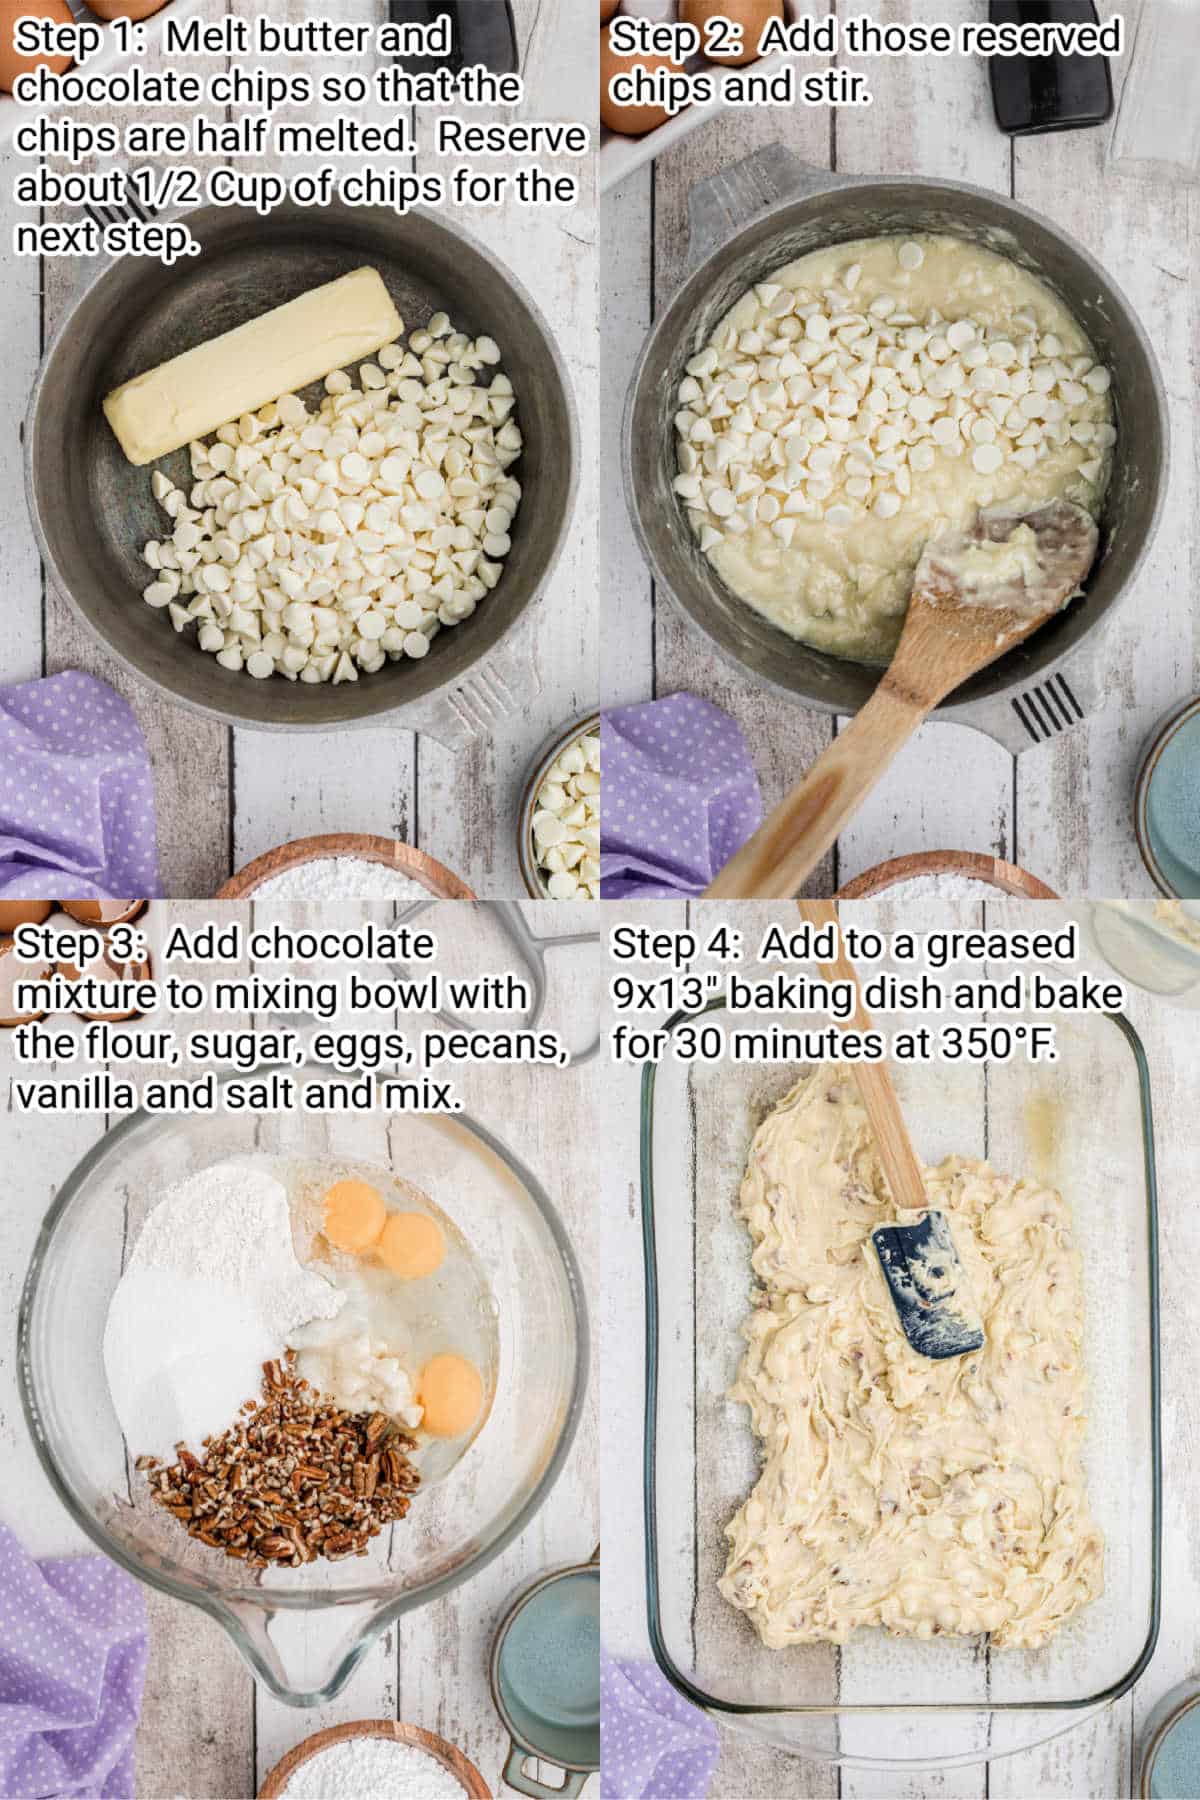 4 images showing steps to take to make vanilla brownies